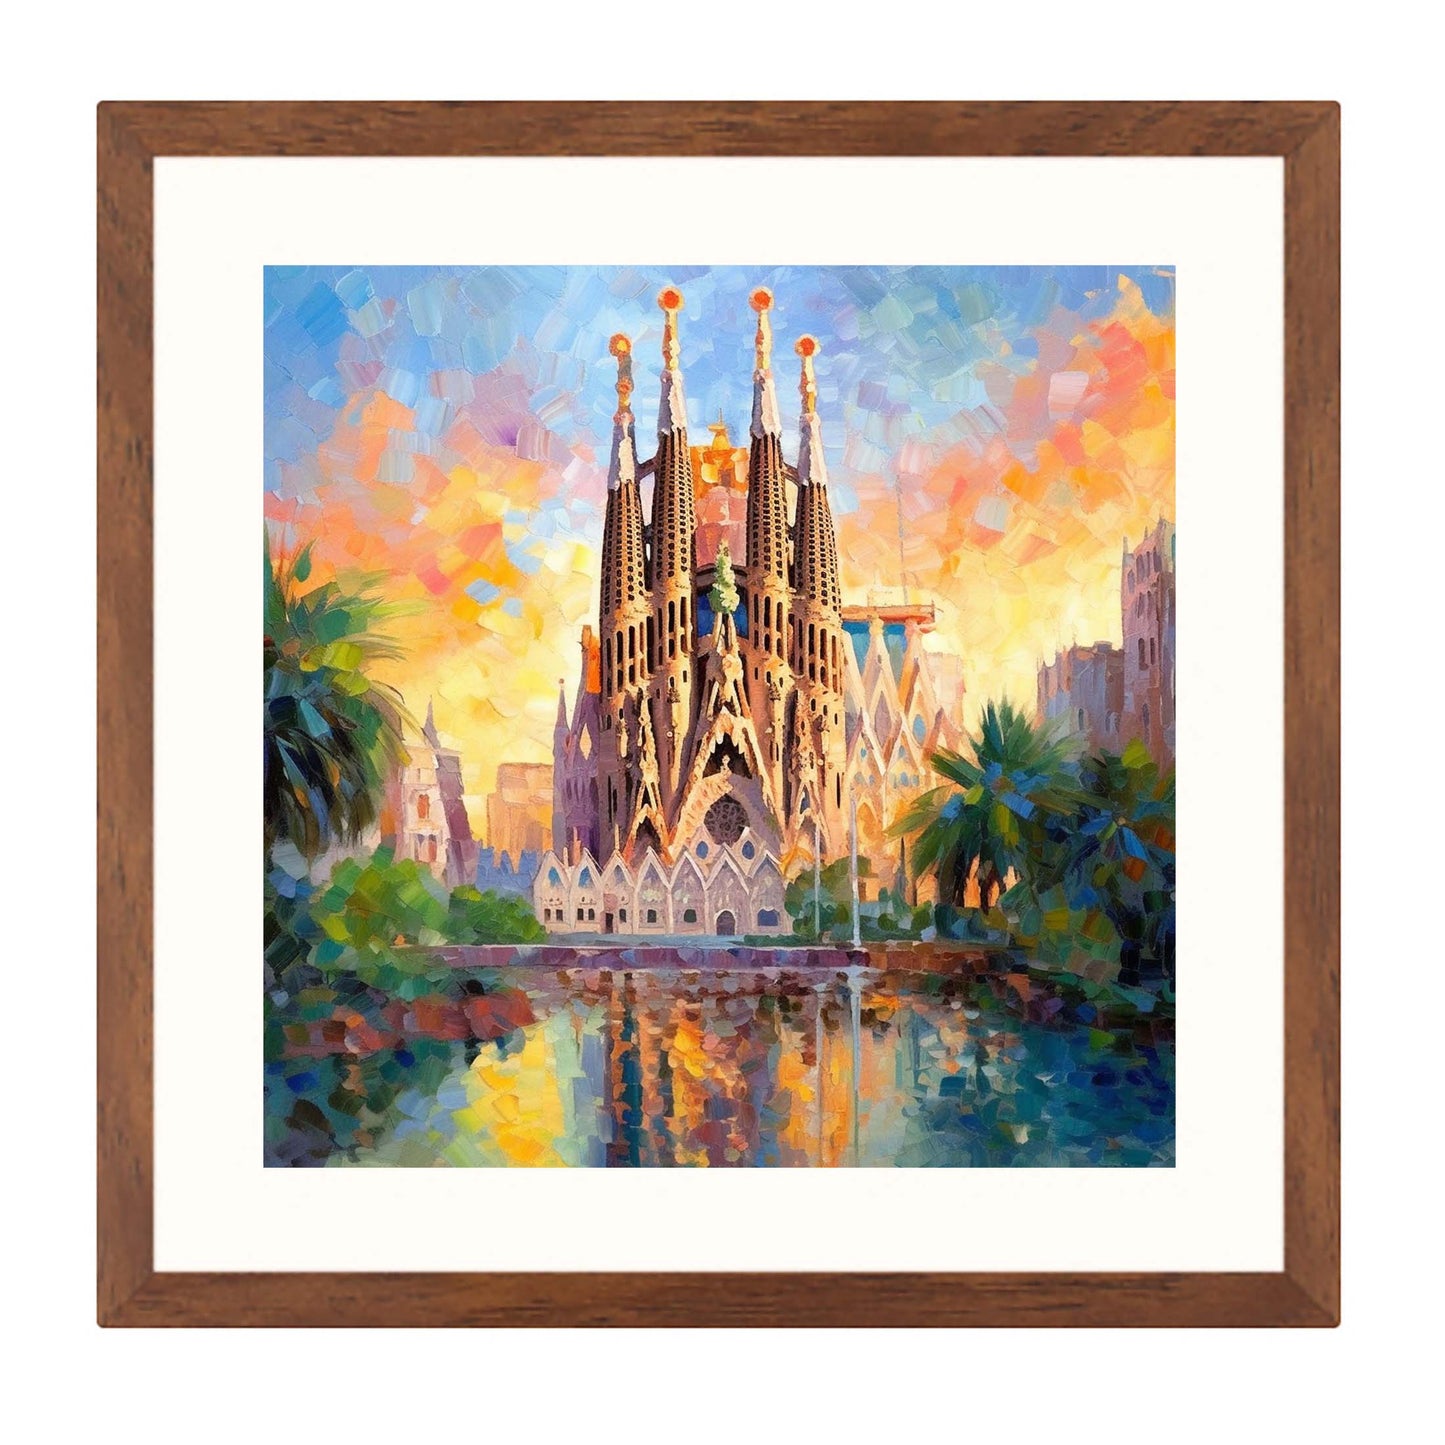 Barcelona Sagrada Familia - mural in the style of impressionism